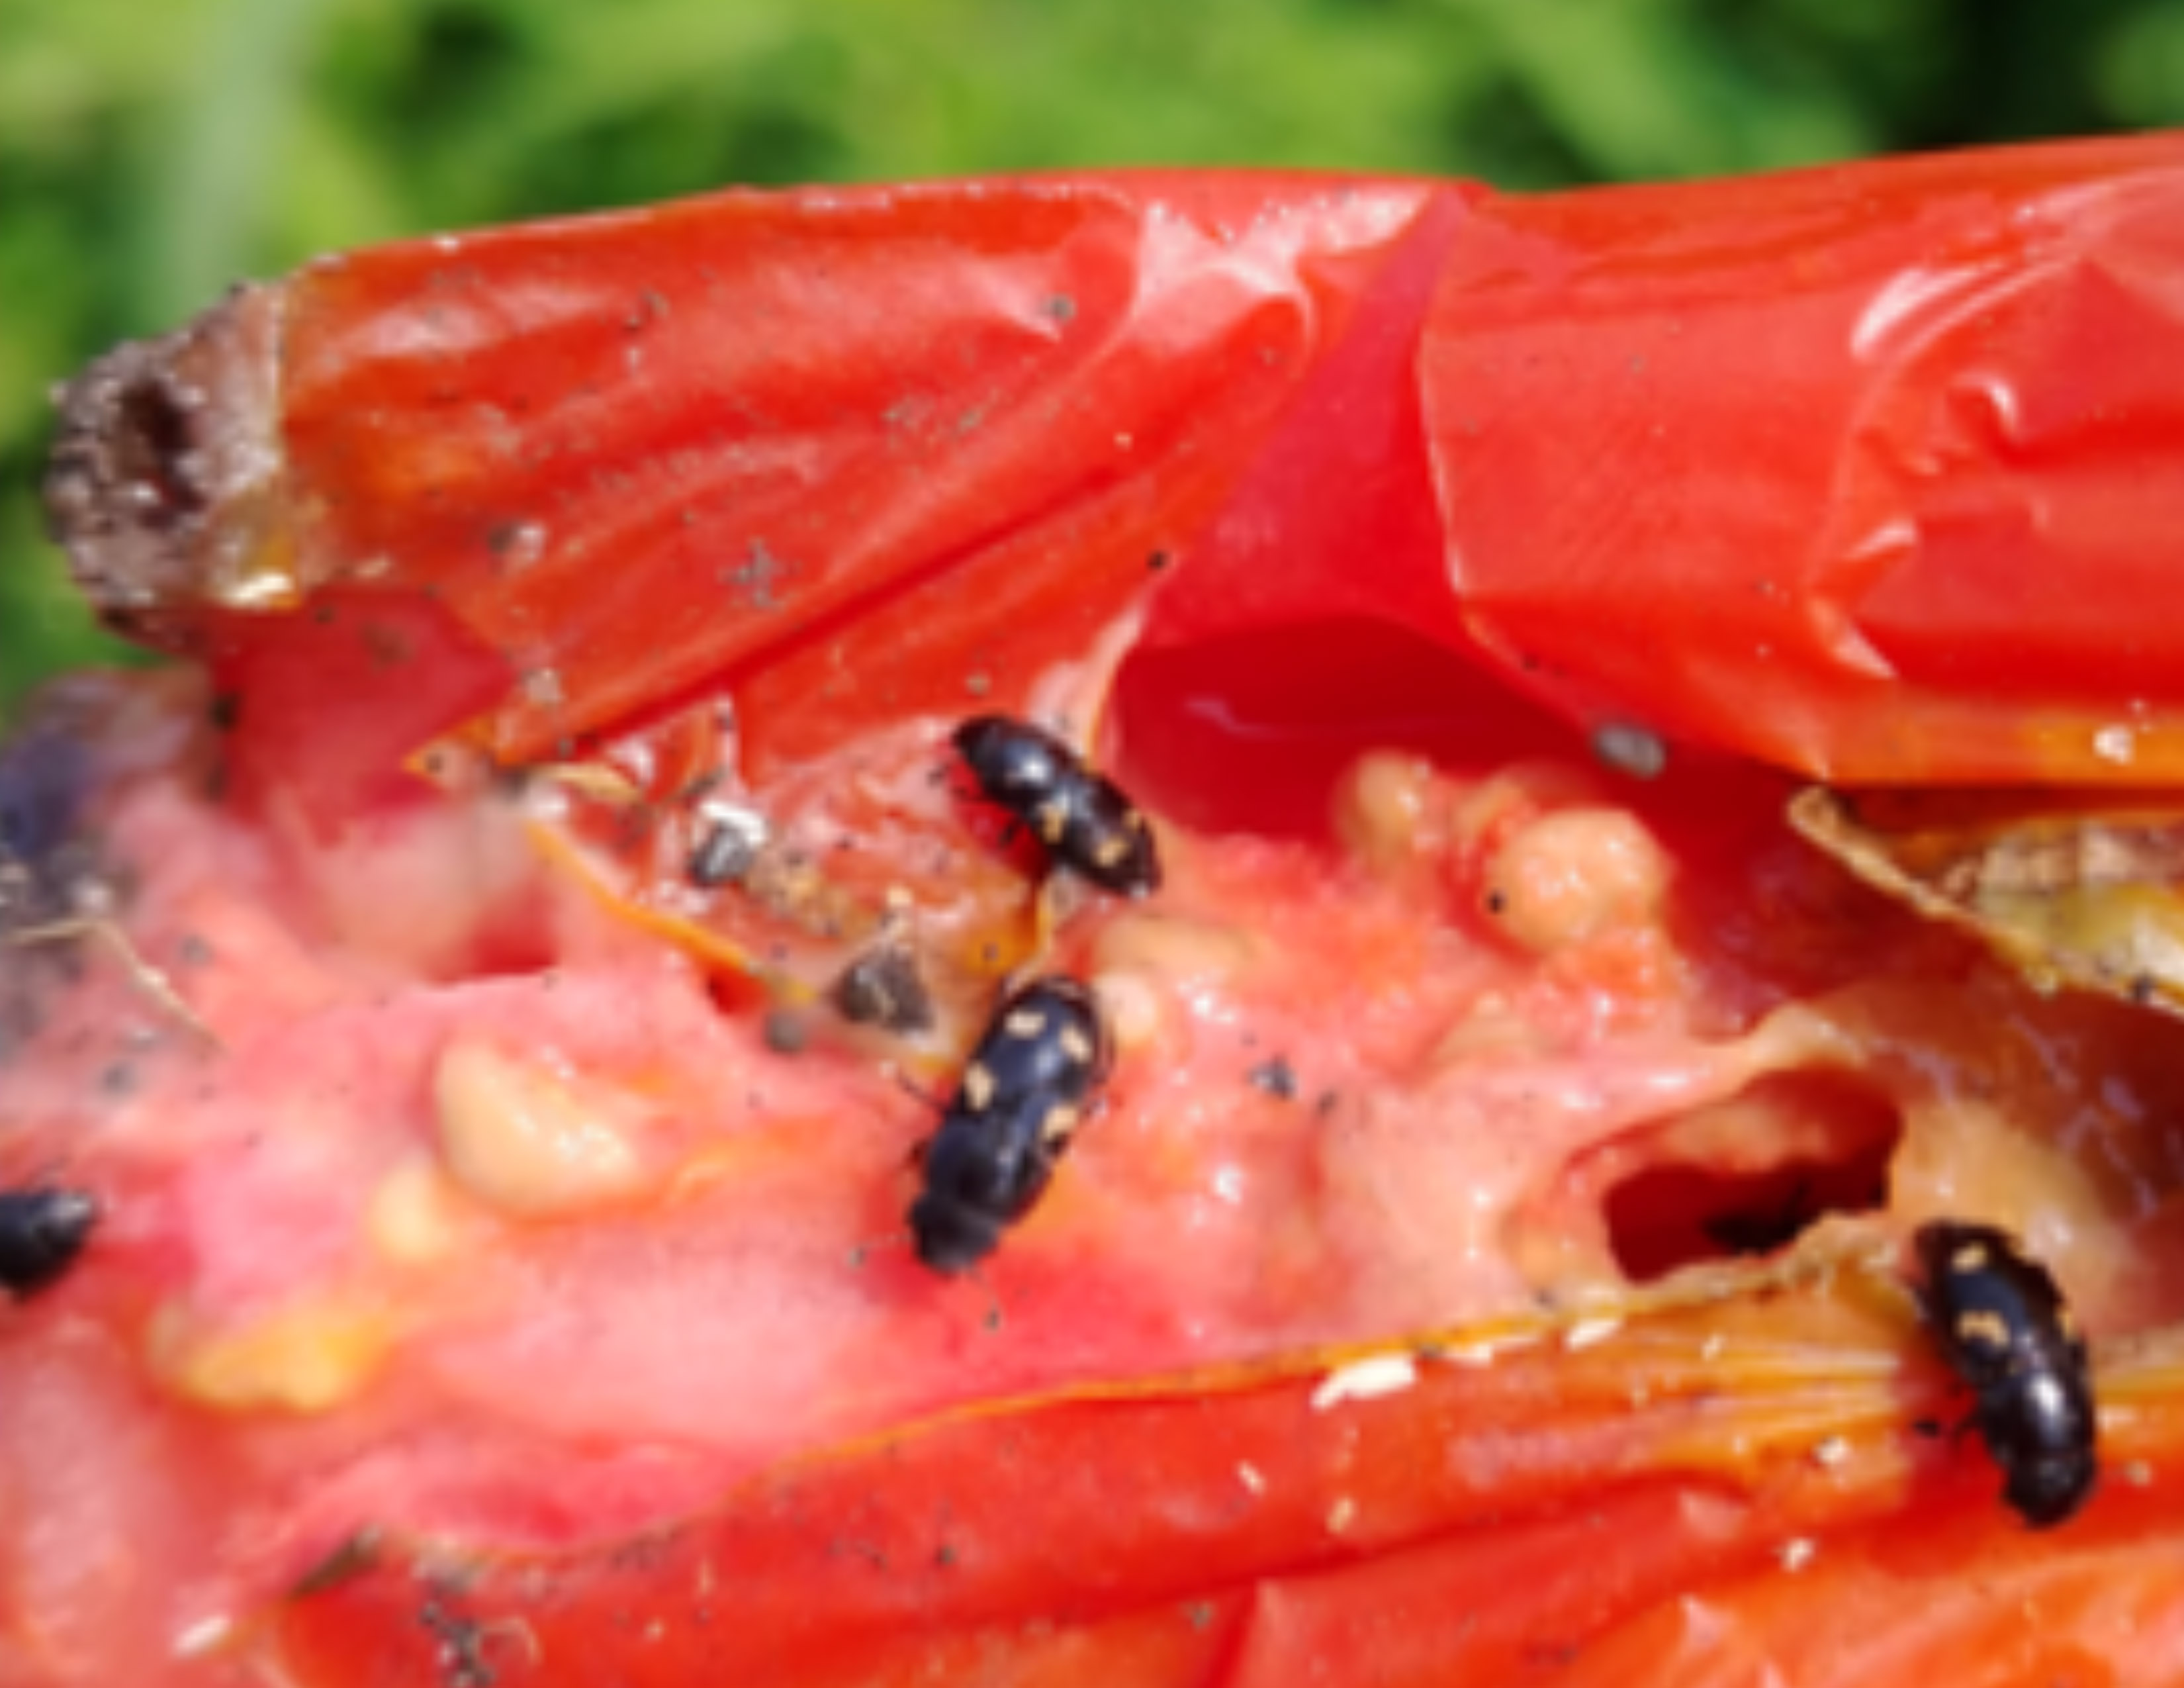 Black beetles with orange or yellow spots feeding on a ripe tomato.